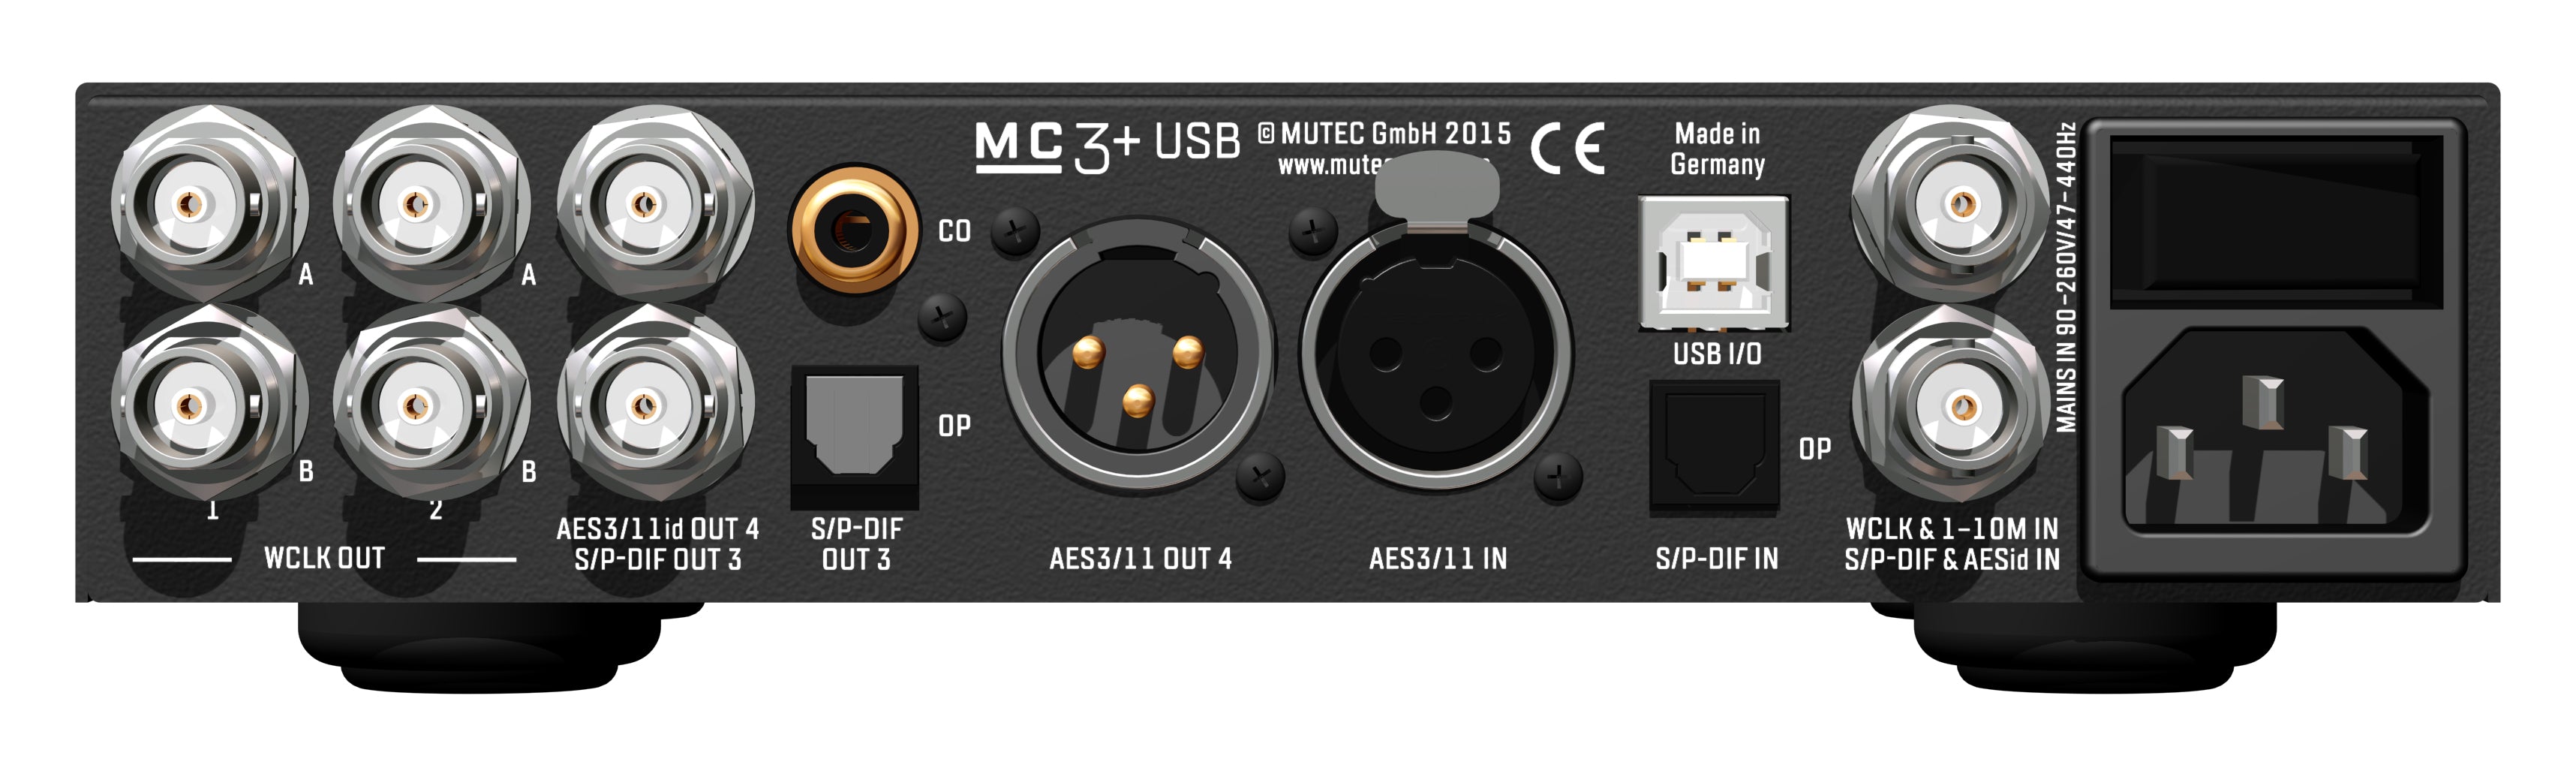 MUTEC MC3+USB